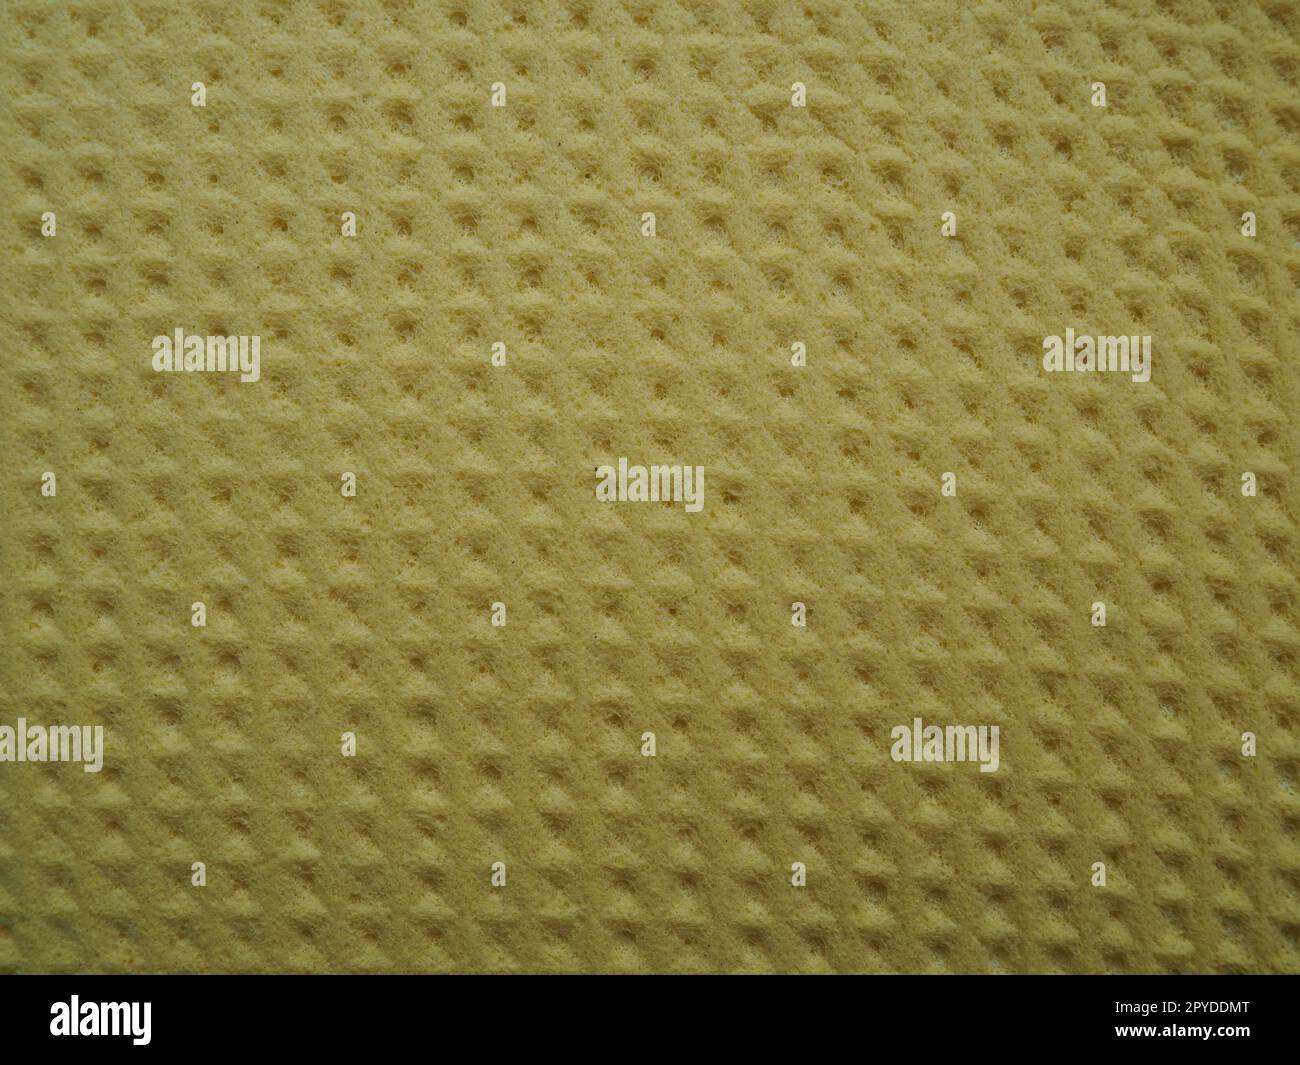 Sponge fibers sponge texture pattern surface close-up yellow brown background Stock Photo